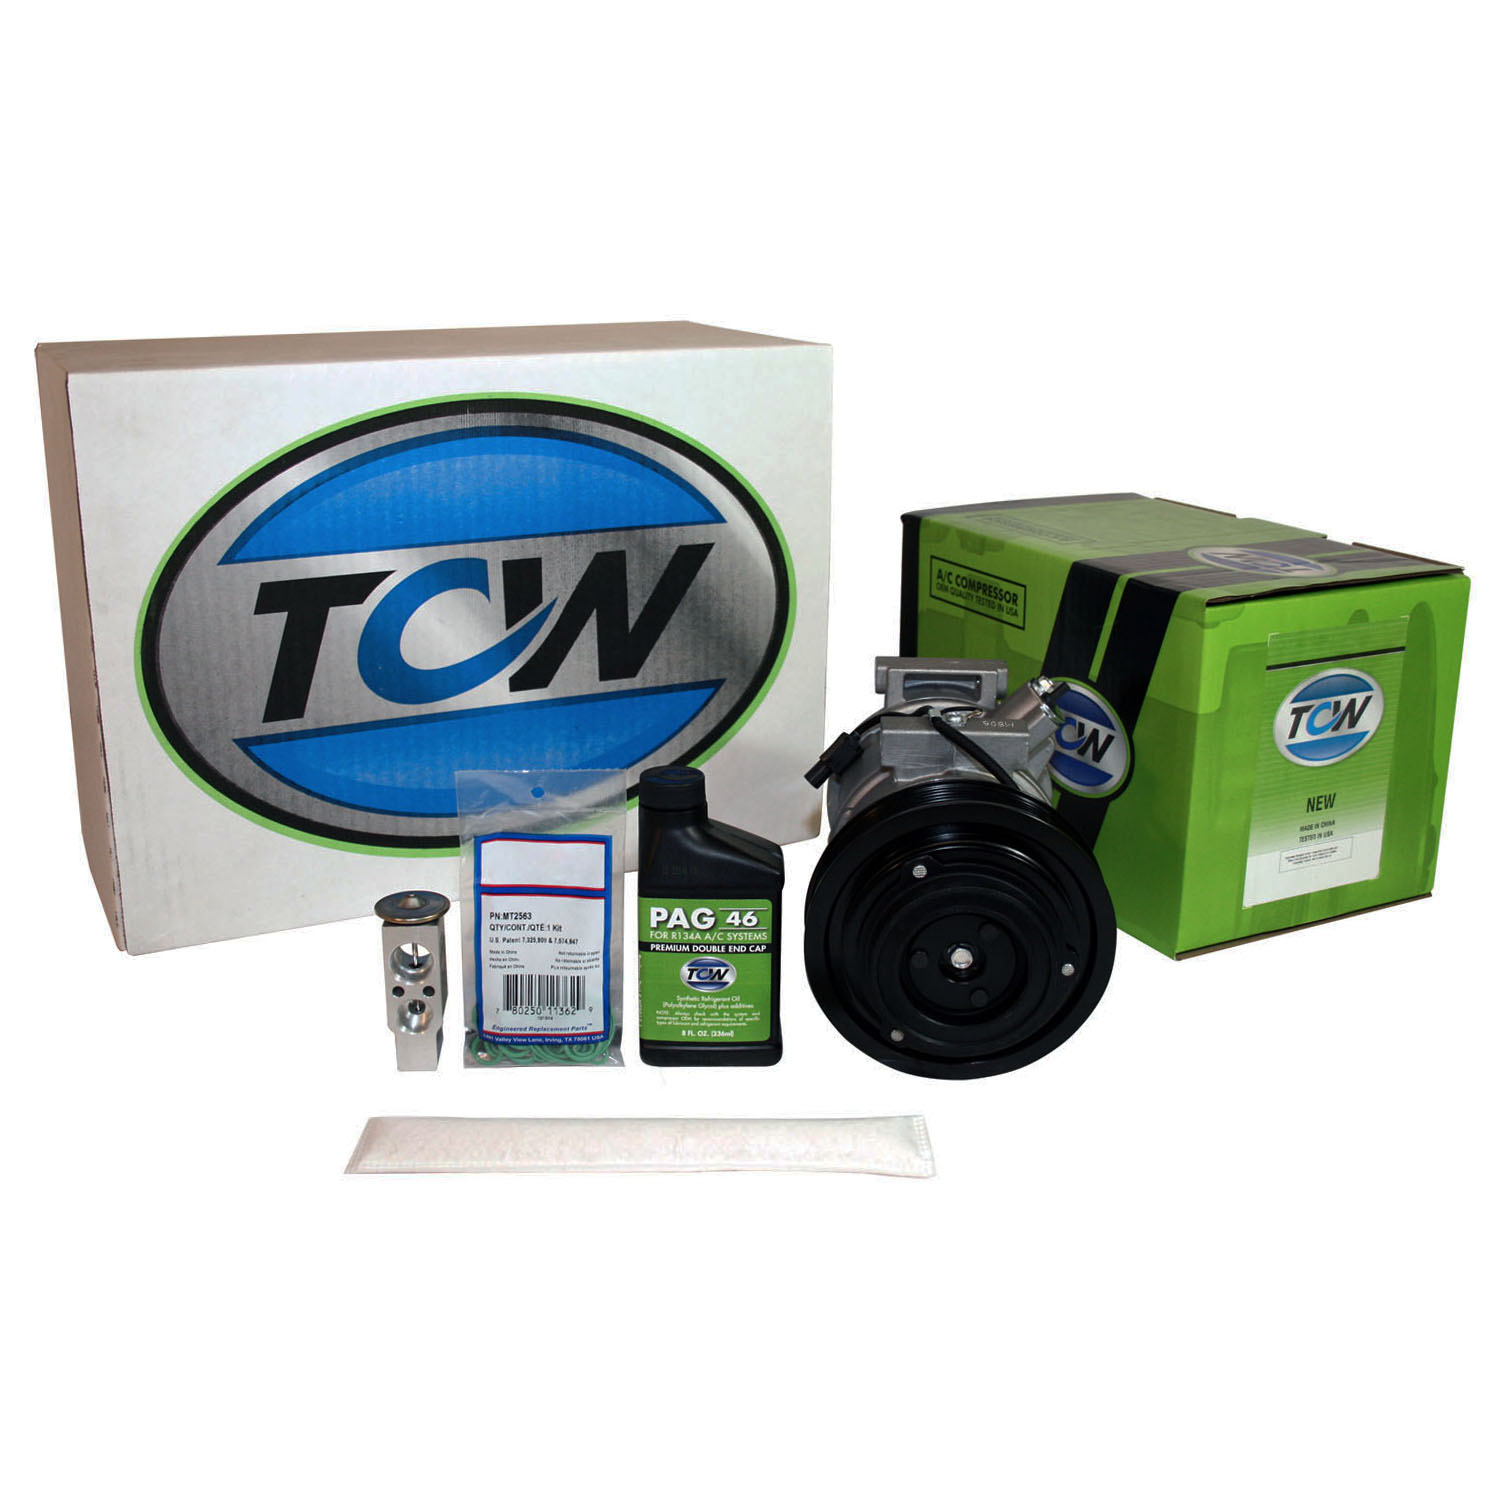 TCW Vehicle A/C Kit K1000399N New Product Image field_60b6a13a6e67c